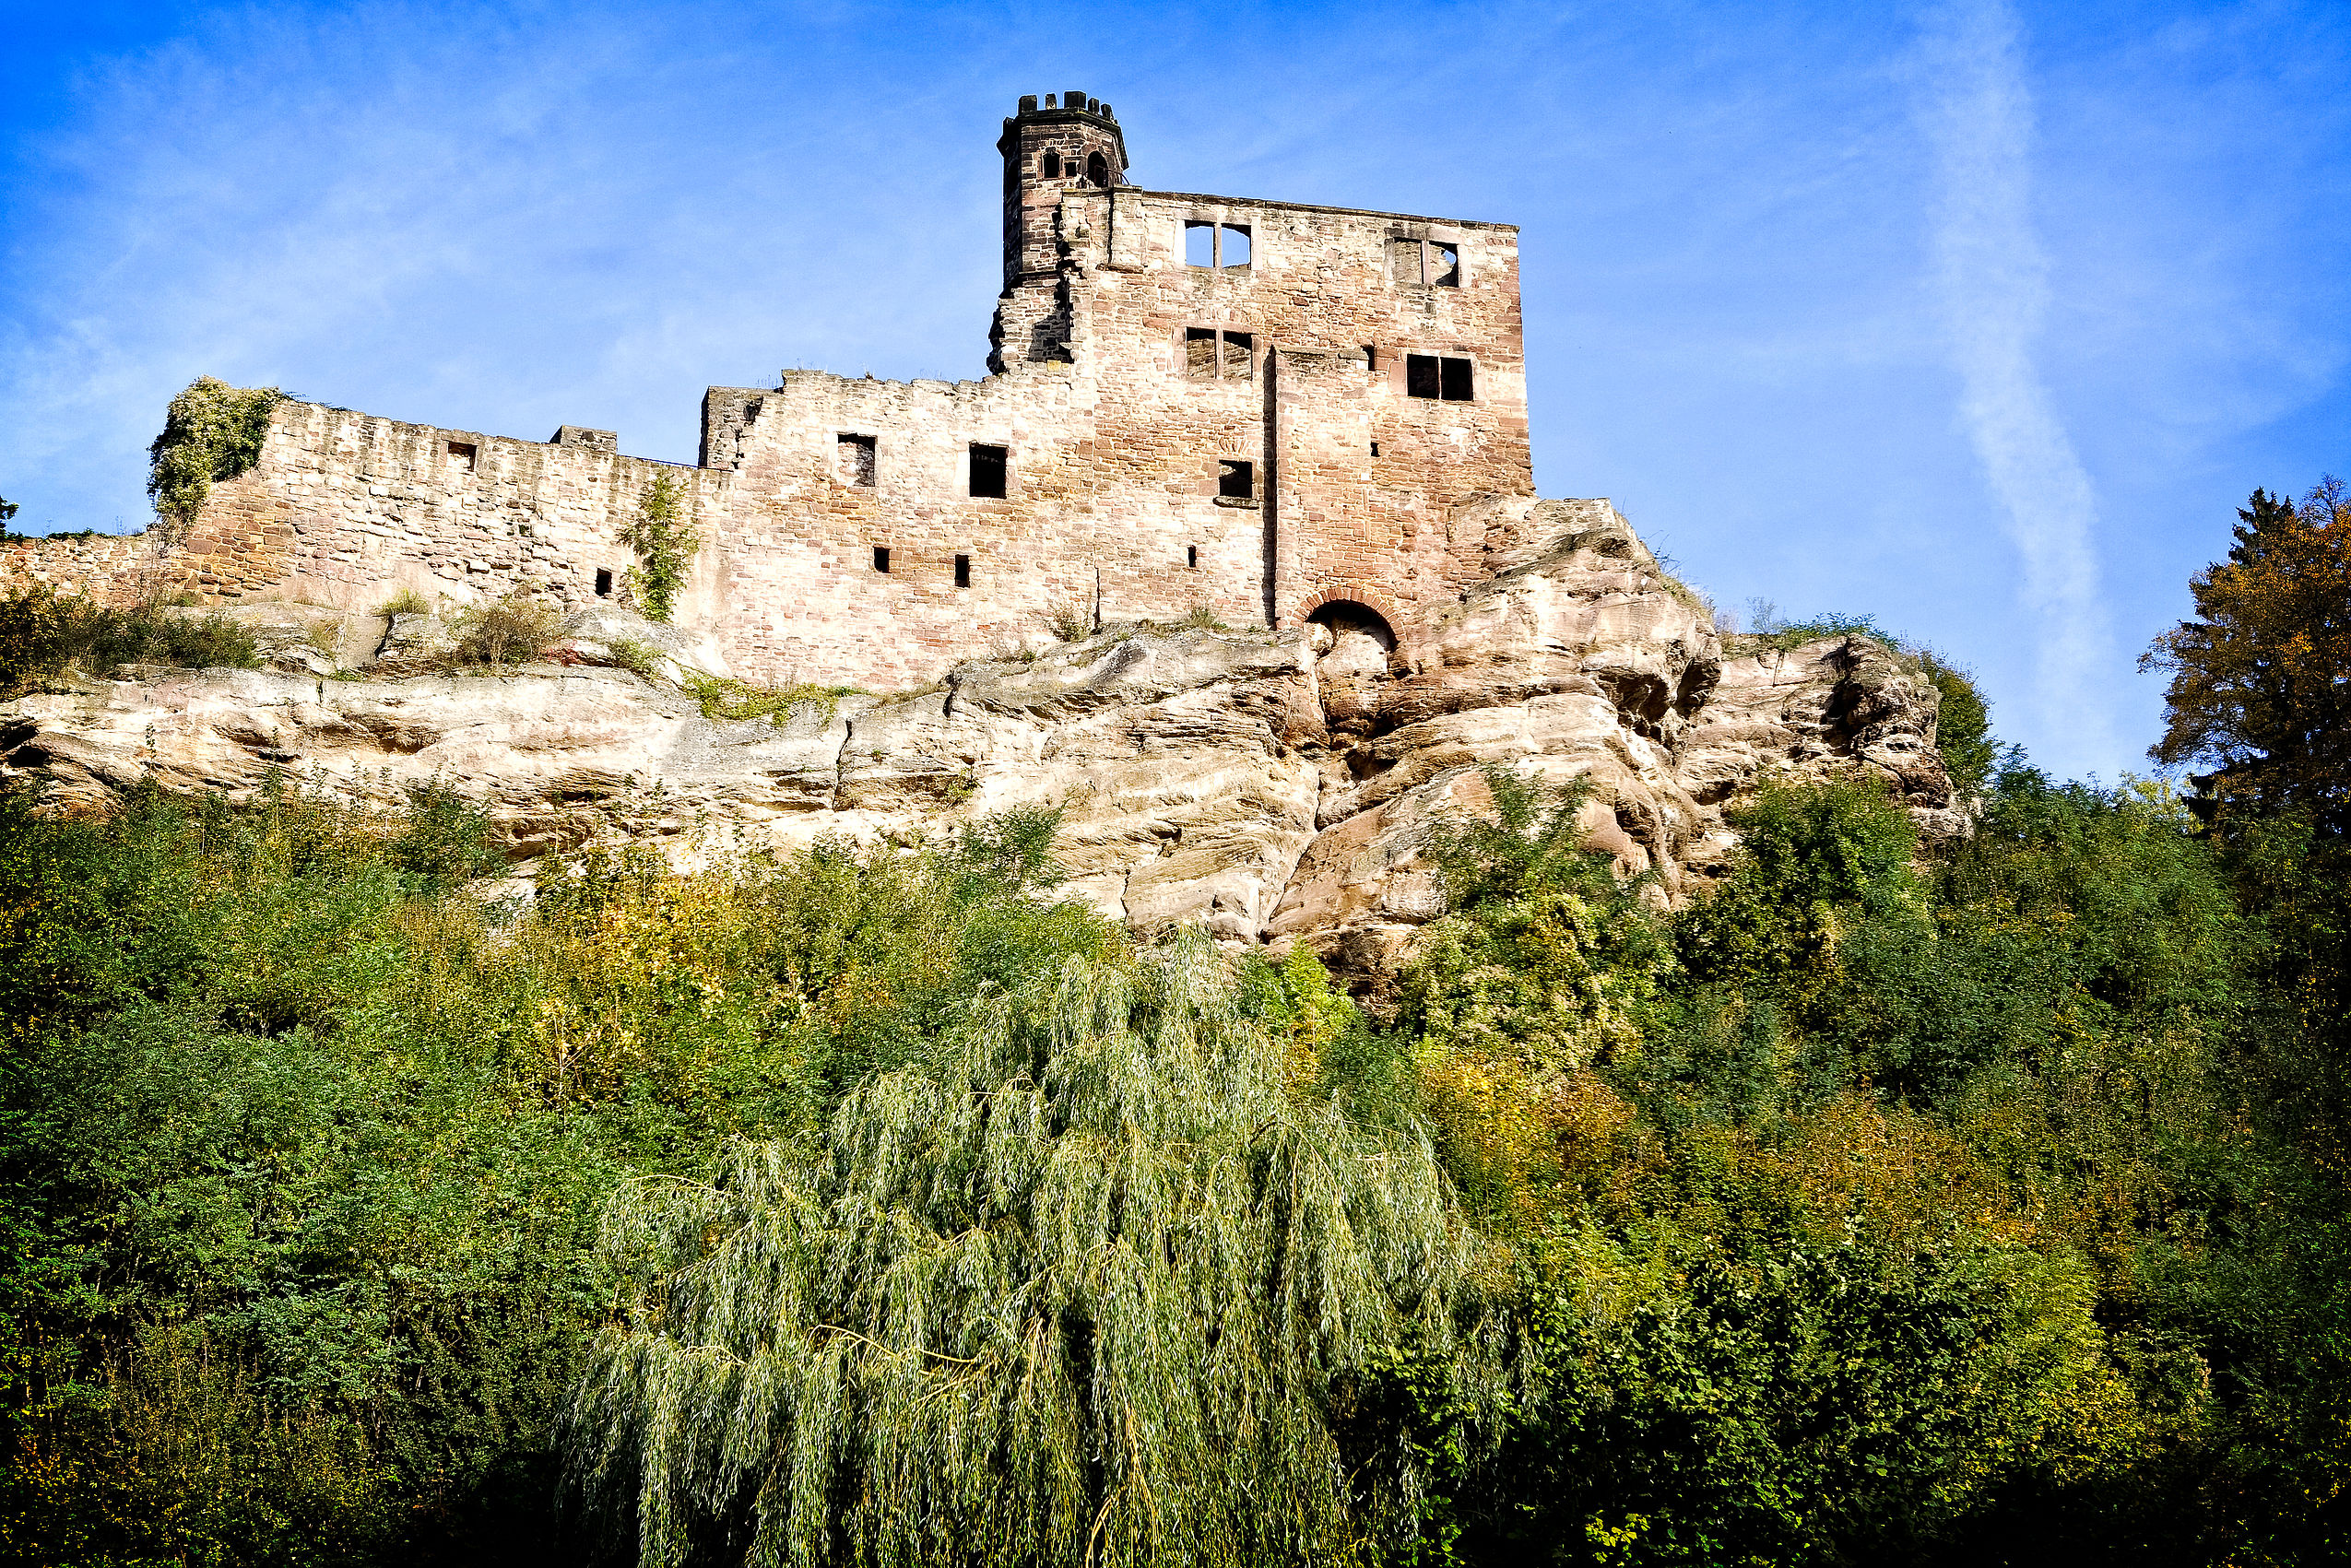 Die alte Burg Hardenberg vor blauem Himmel